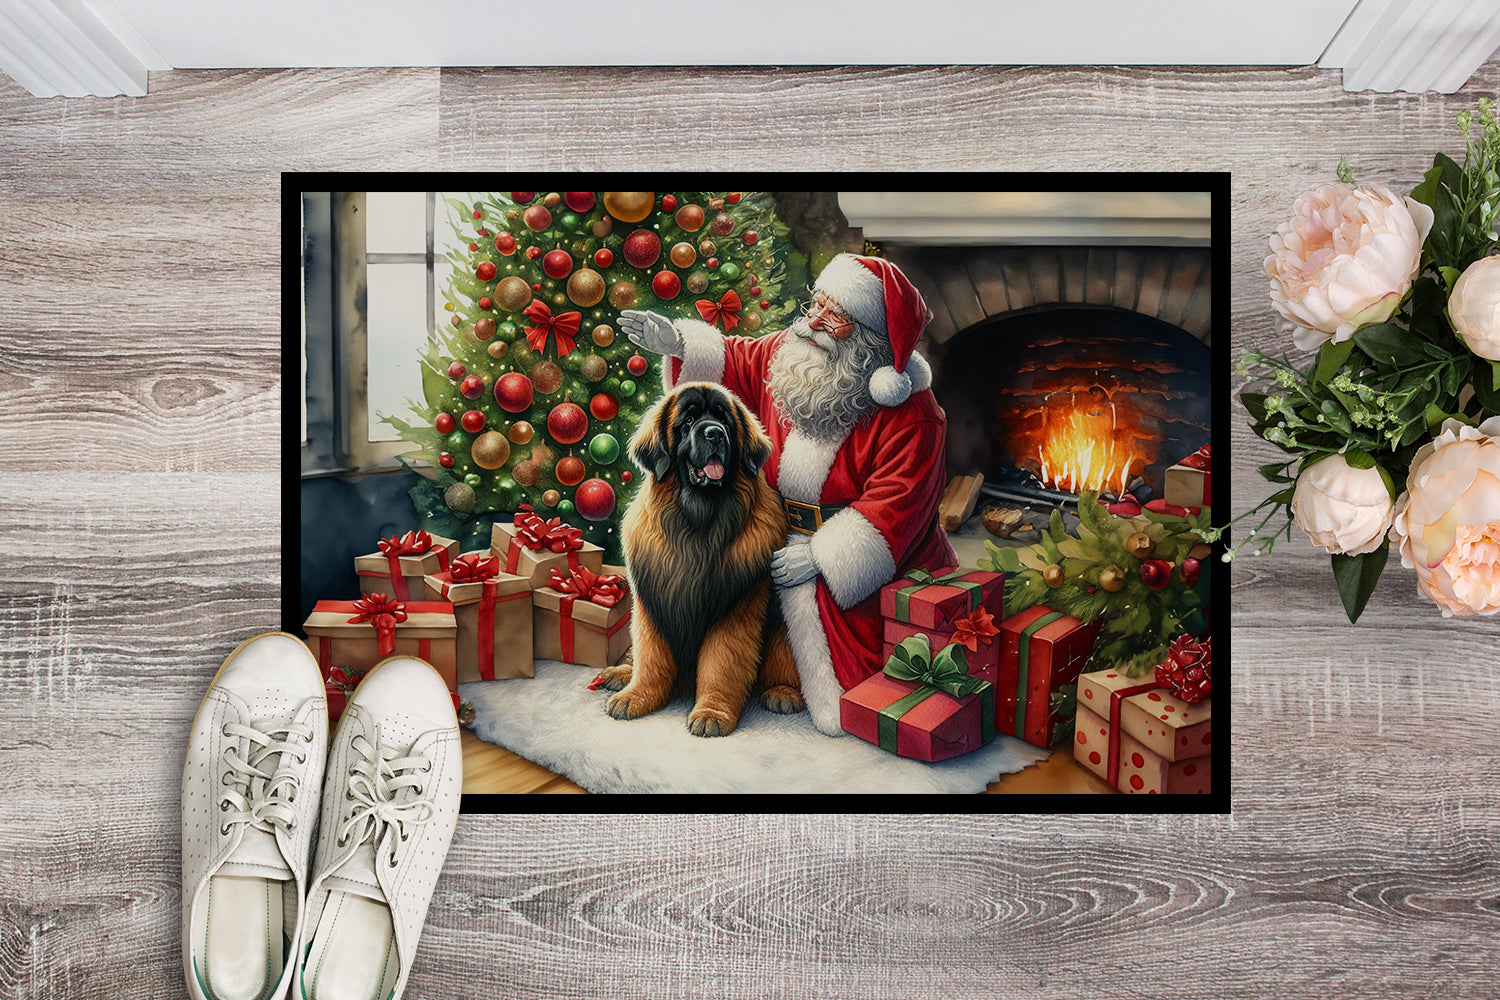 Buy this Leonberger and Santa Claus Doormat